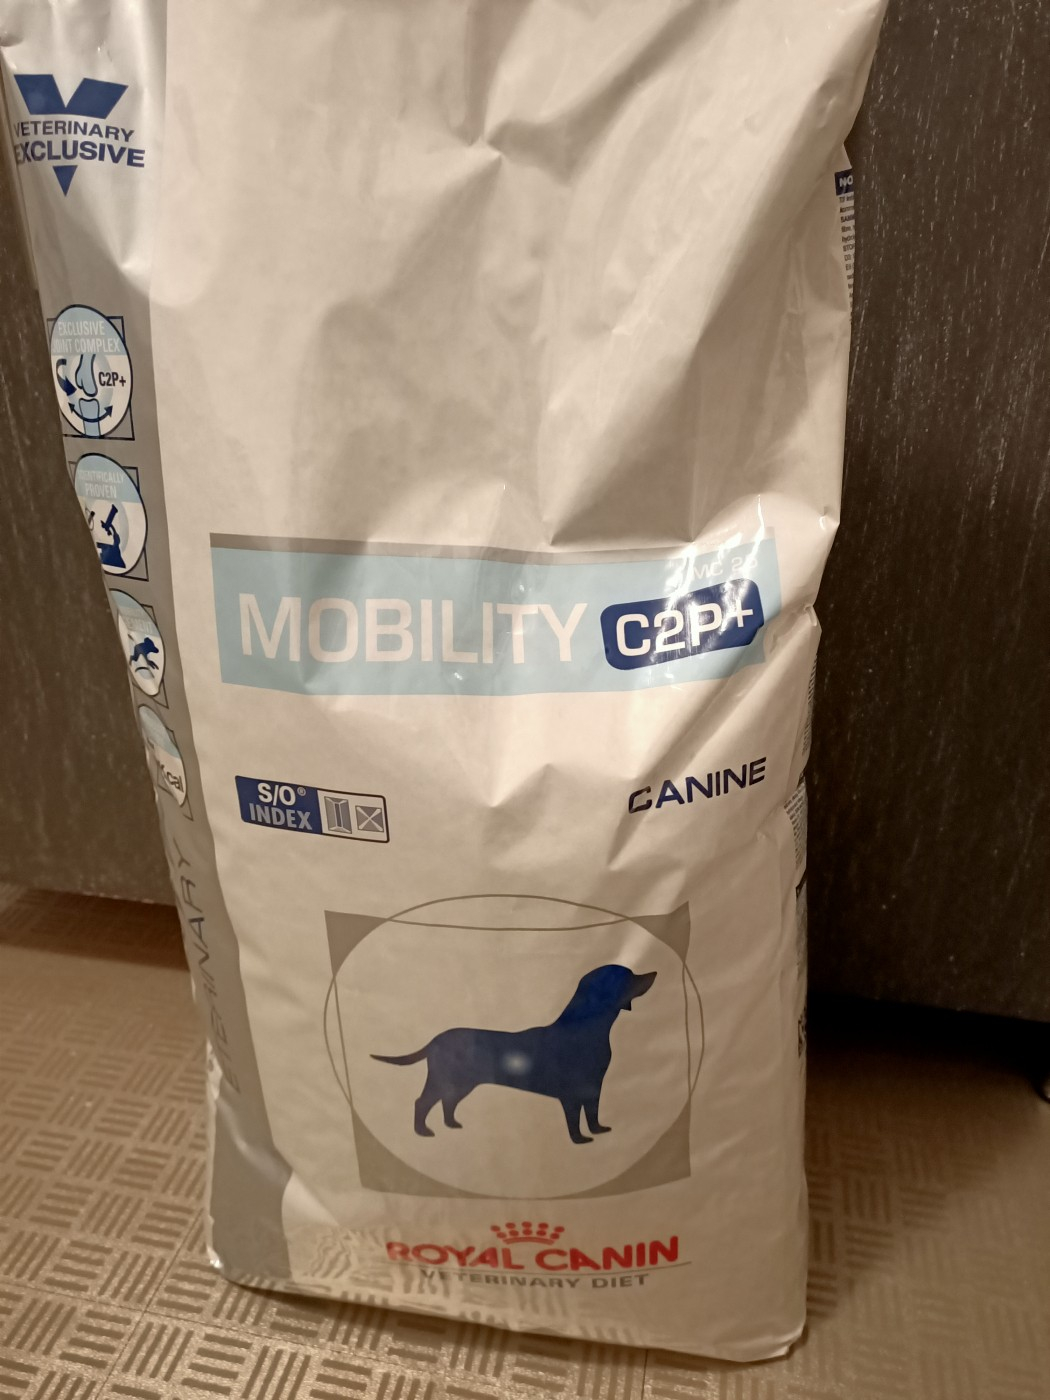 Meditatief Nationaal Weinig Royal Canin Veterinary Diet Mobility C2P+ honden